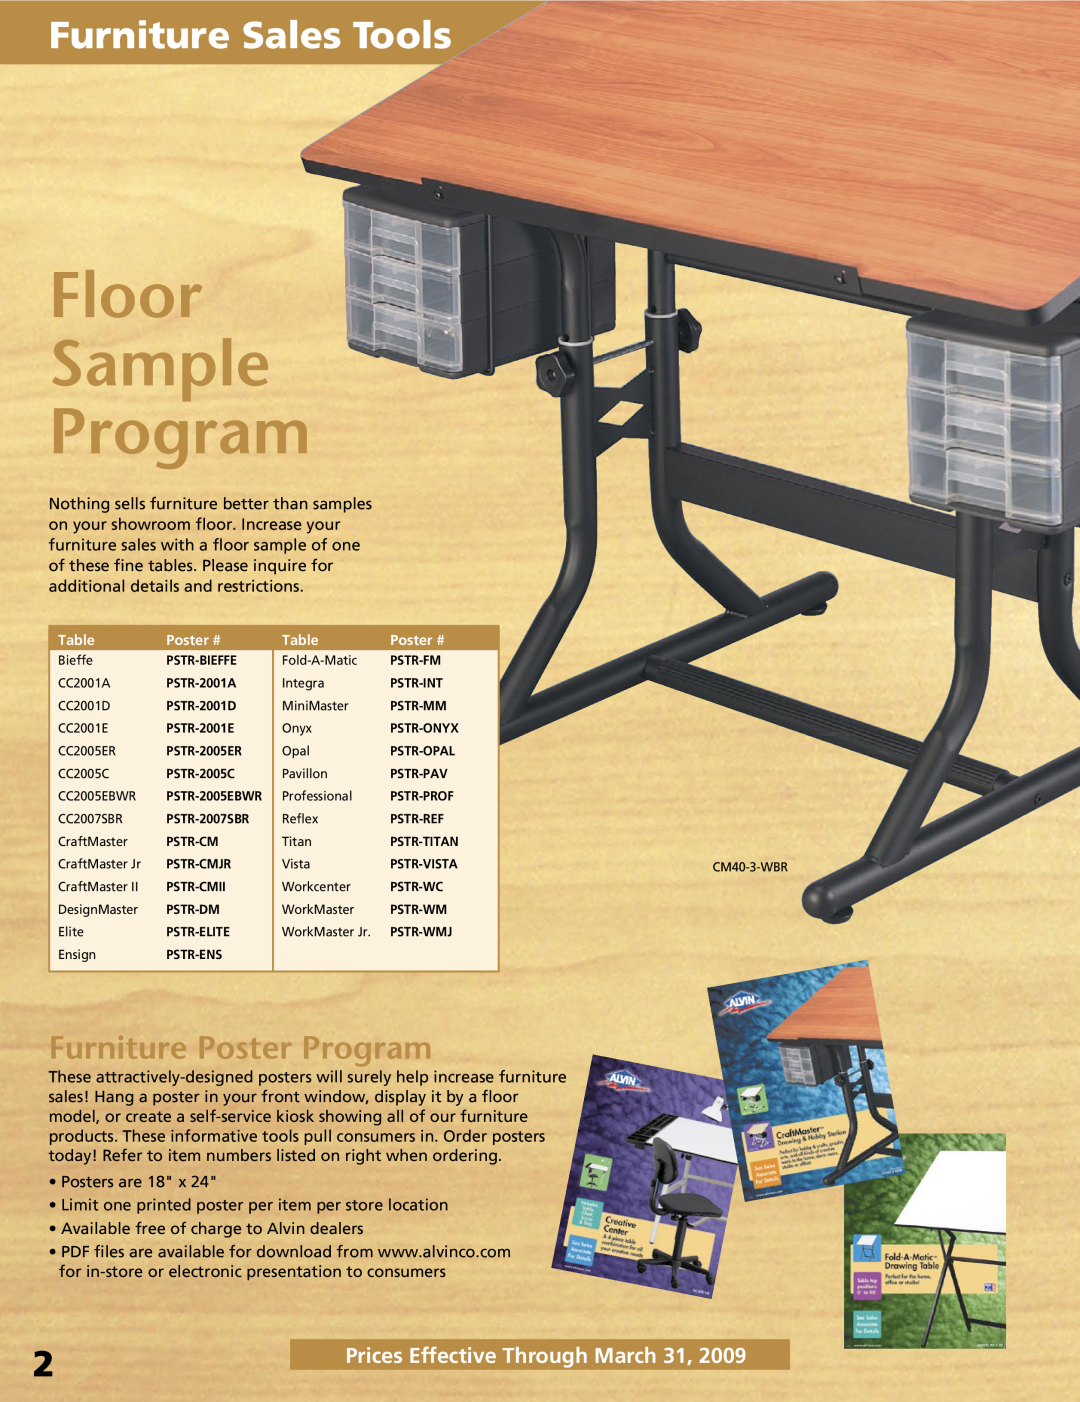 Alvin XX-3-XB Furniture Sales Tools, Floor Sample Program, Furniture Poster Program, Prices Effective Through March 31 